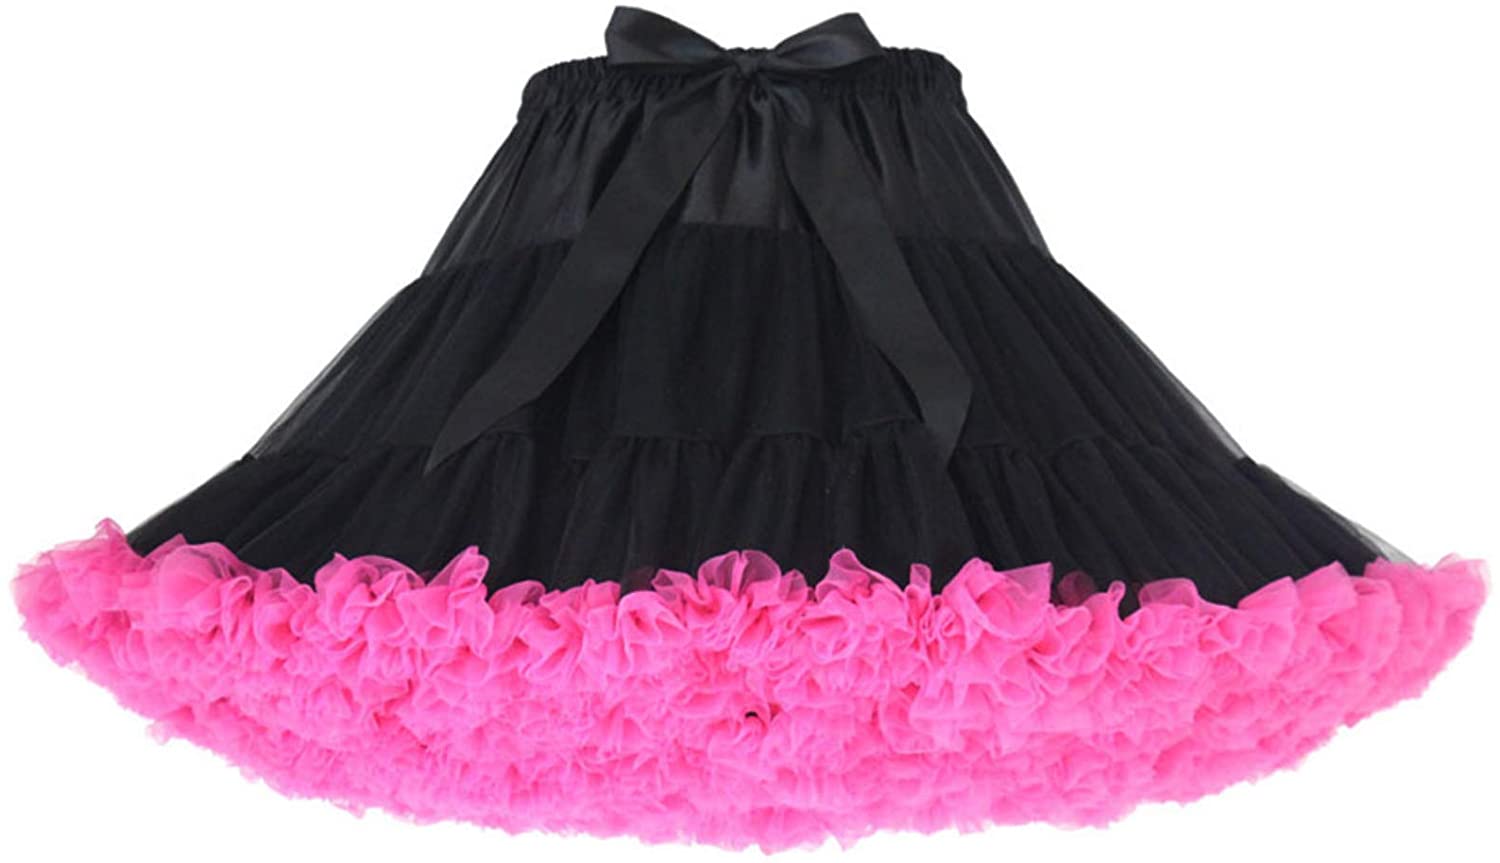 Woman One Layer Rockabilly Petticoat Vintage Pettiskirt Tutu Tulle Skirt New 